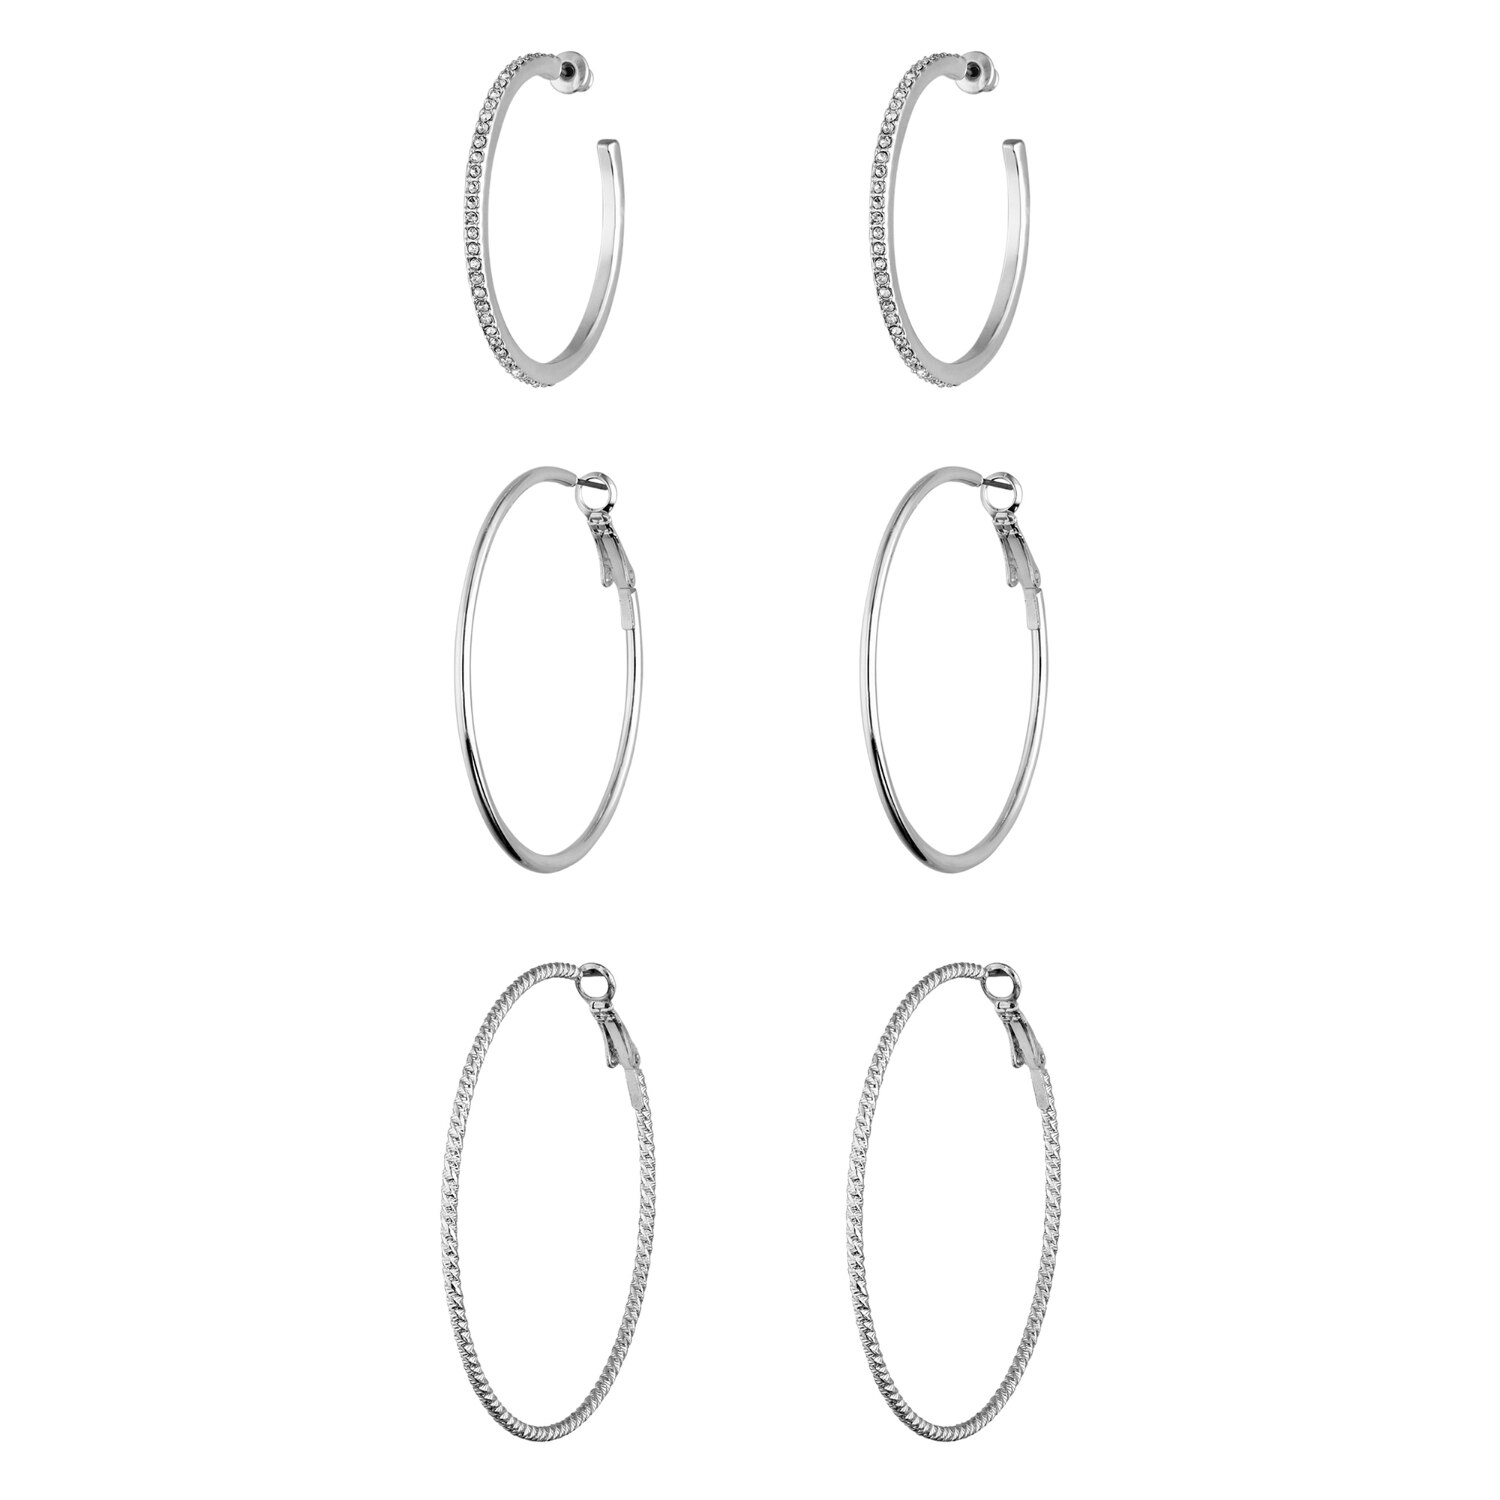 I AM Jewelry Creole Hoop Earring Set, 6CT